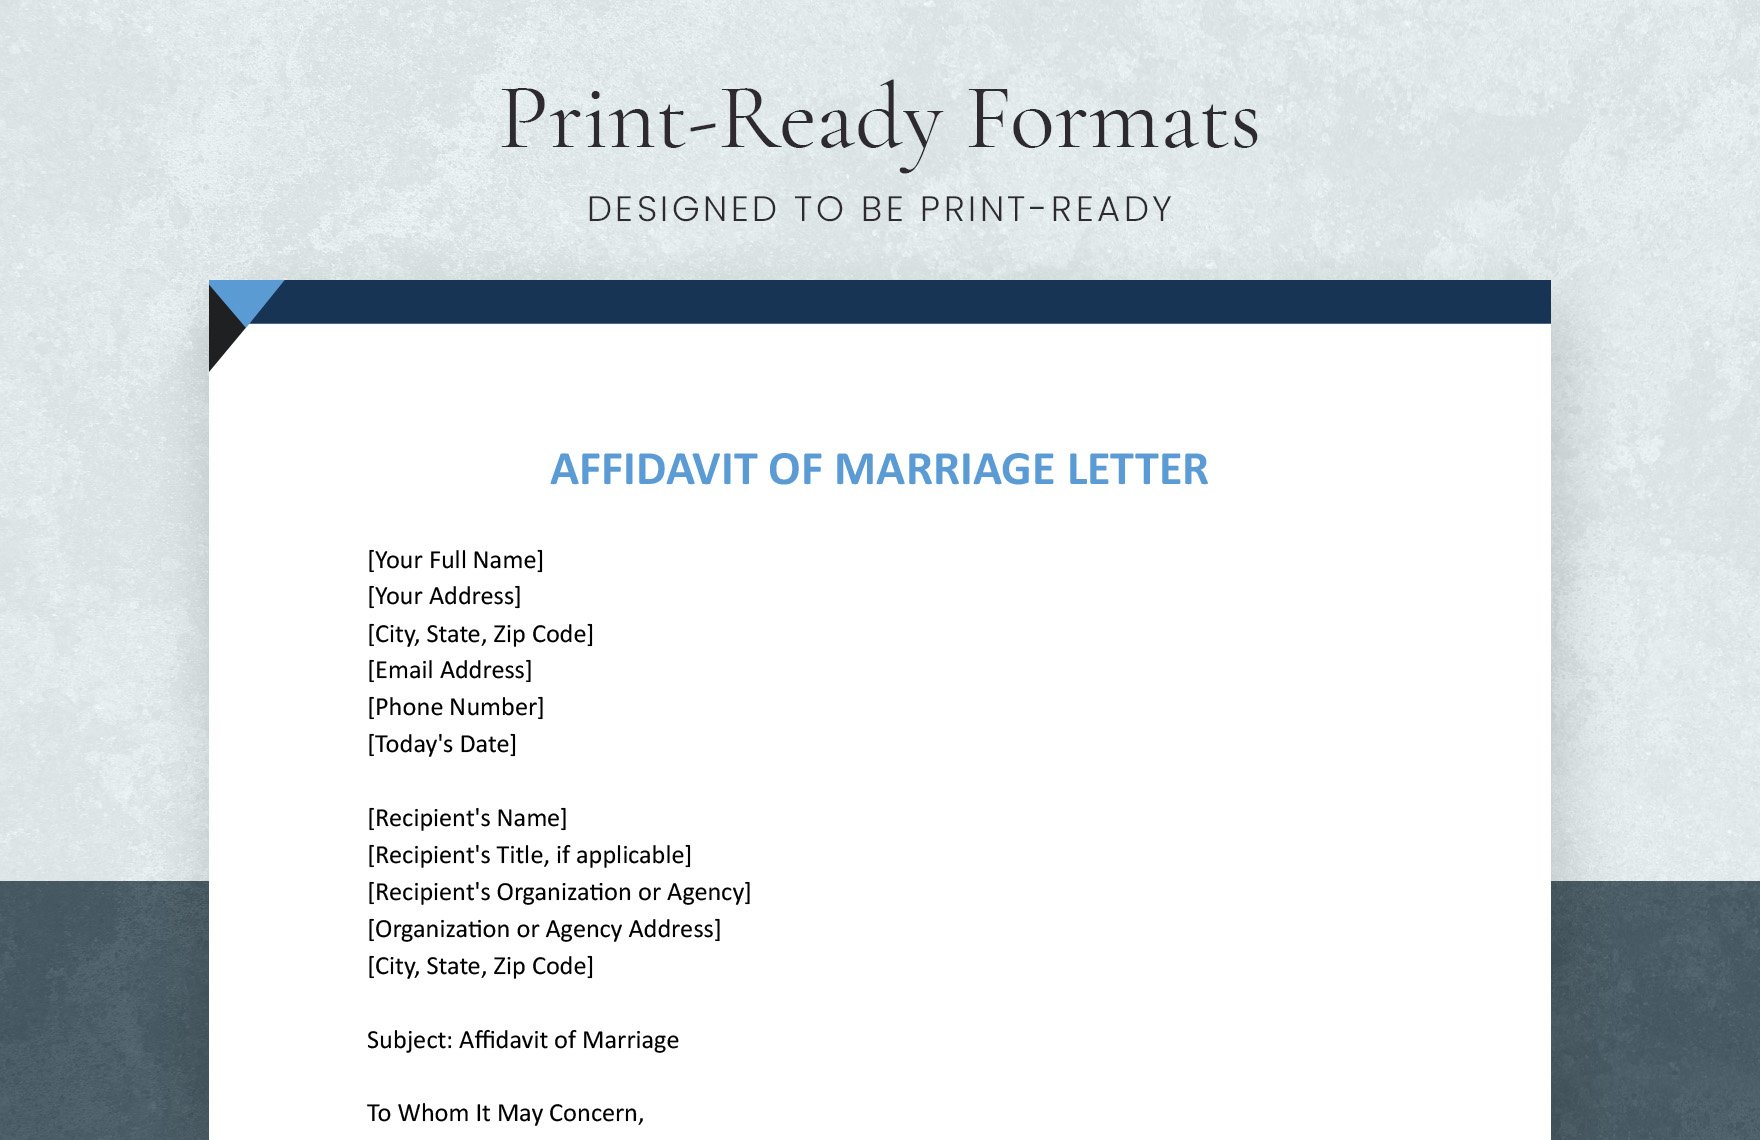 Affidavit Of Marriage Letter